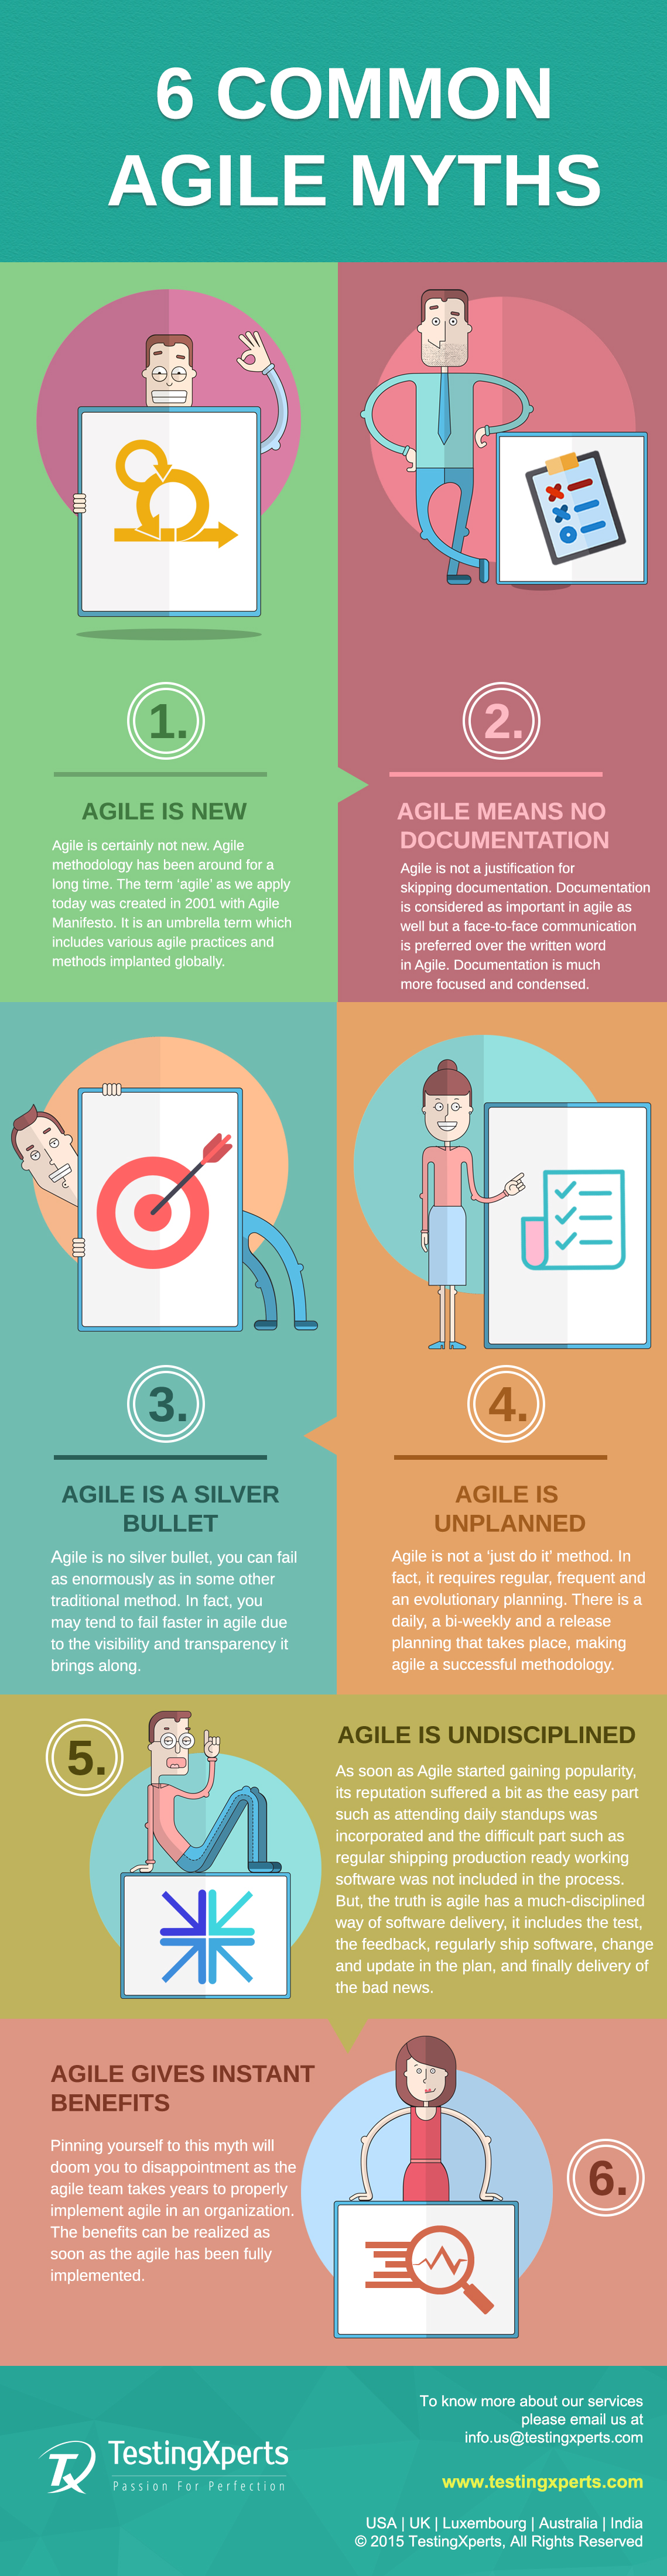 6 Common Agile Myths - Infographic